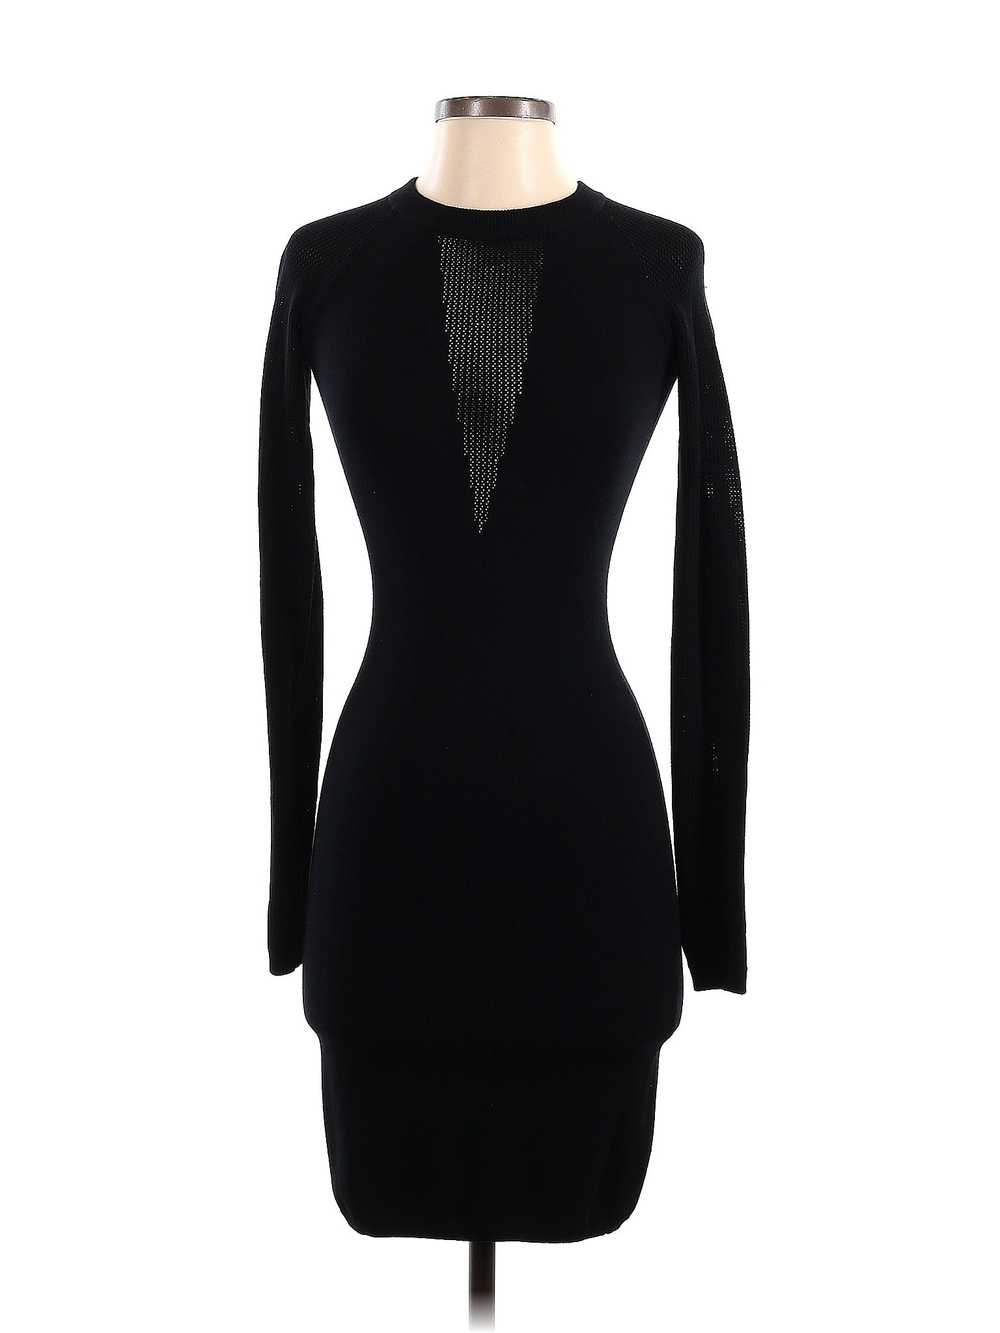 Wilfred Women Black Cocktail Dress XS - image 1